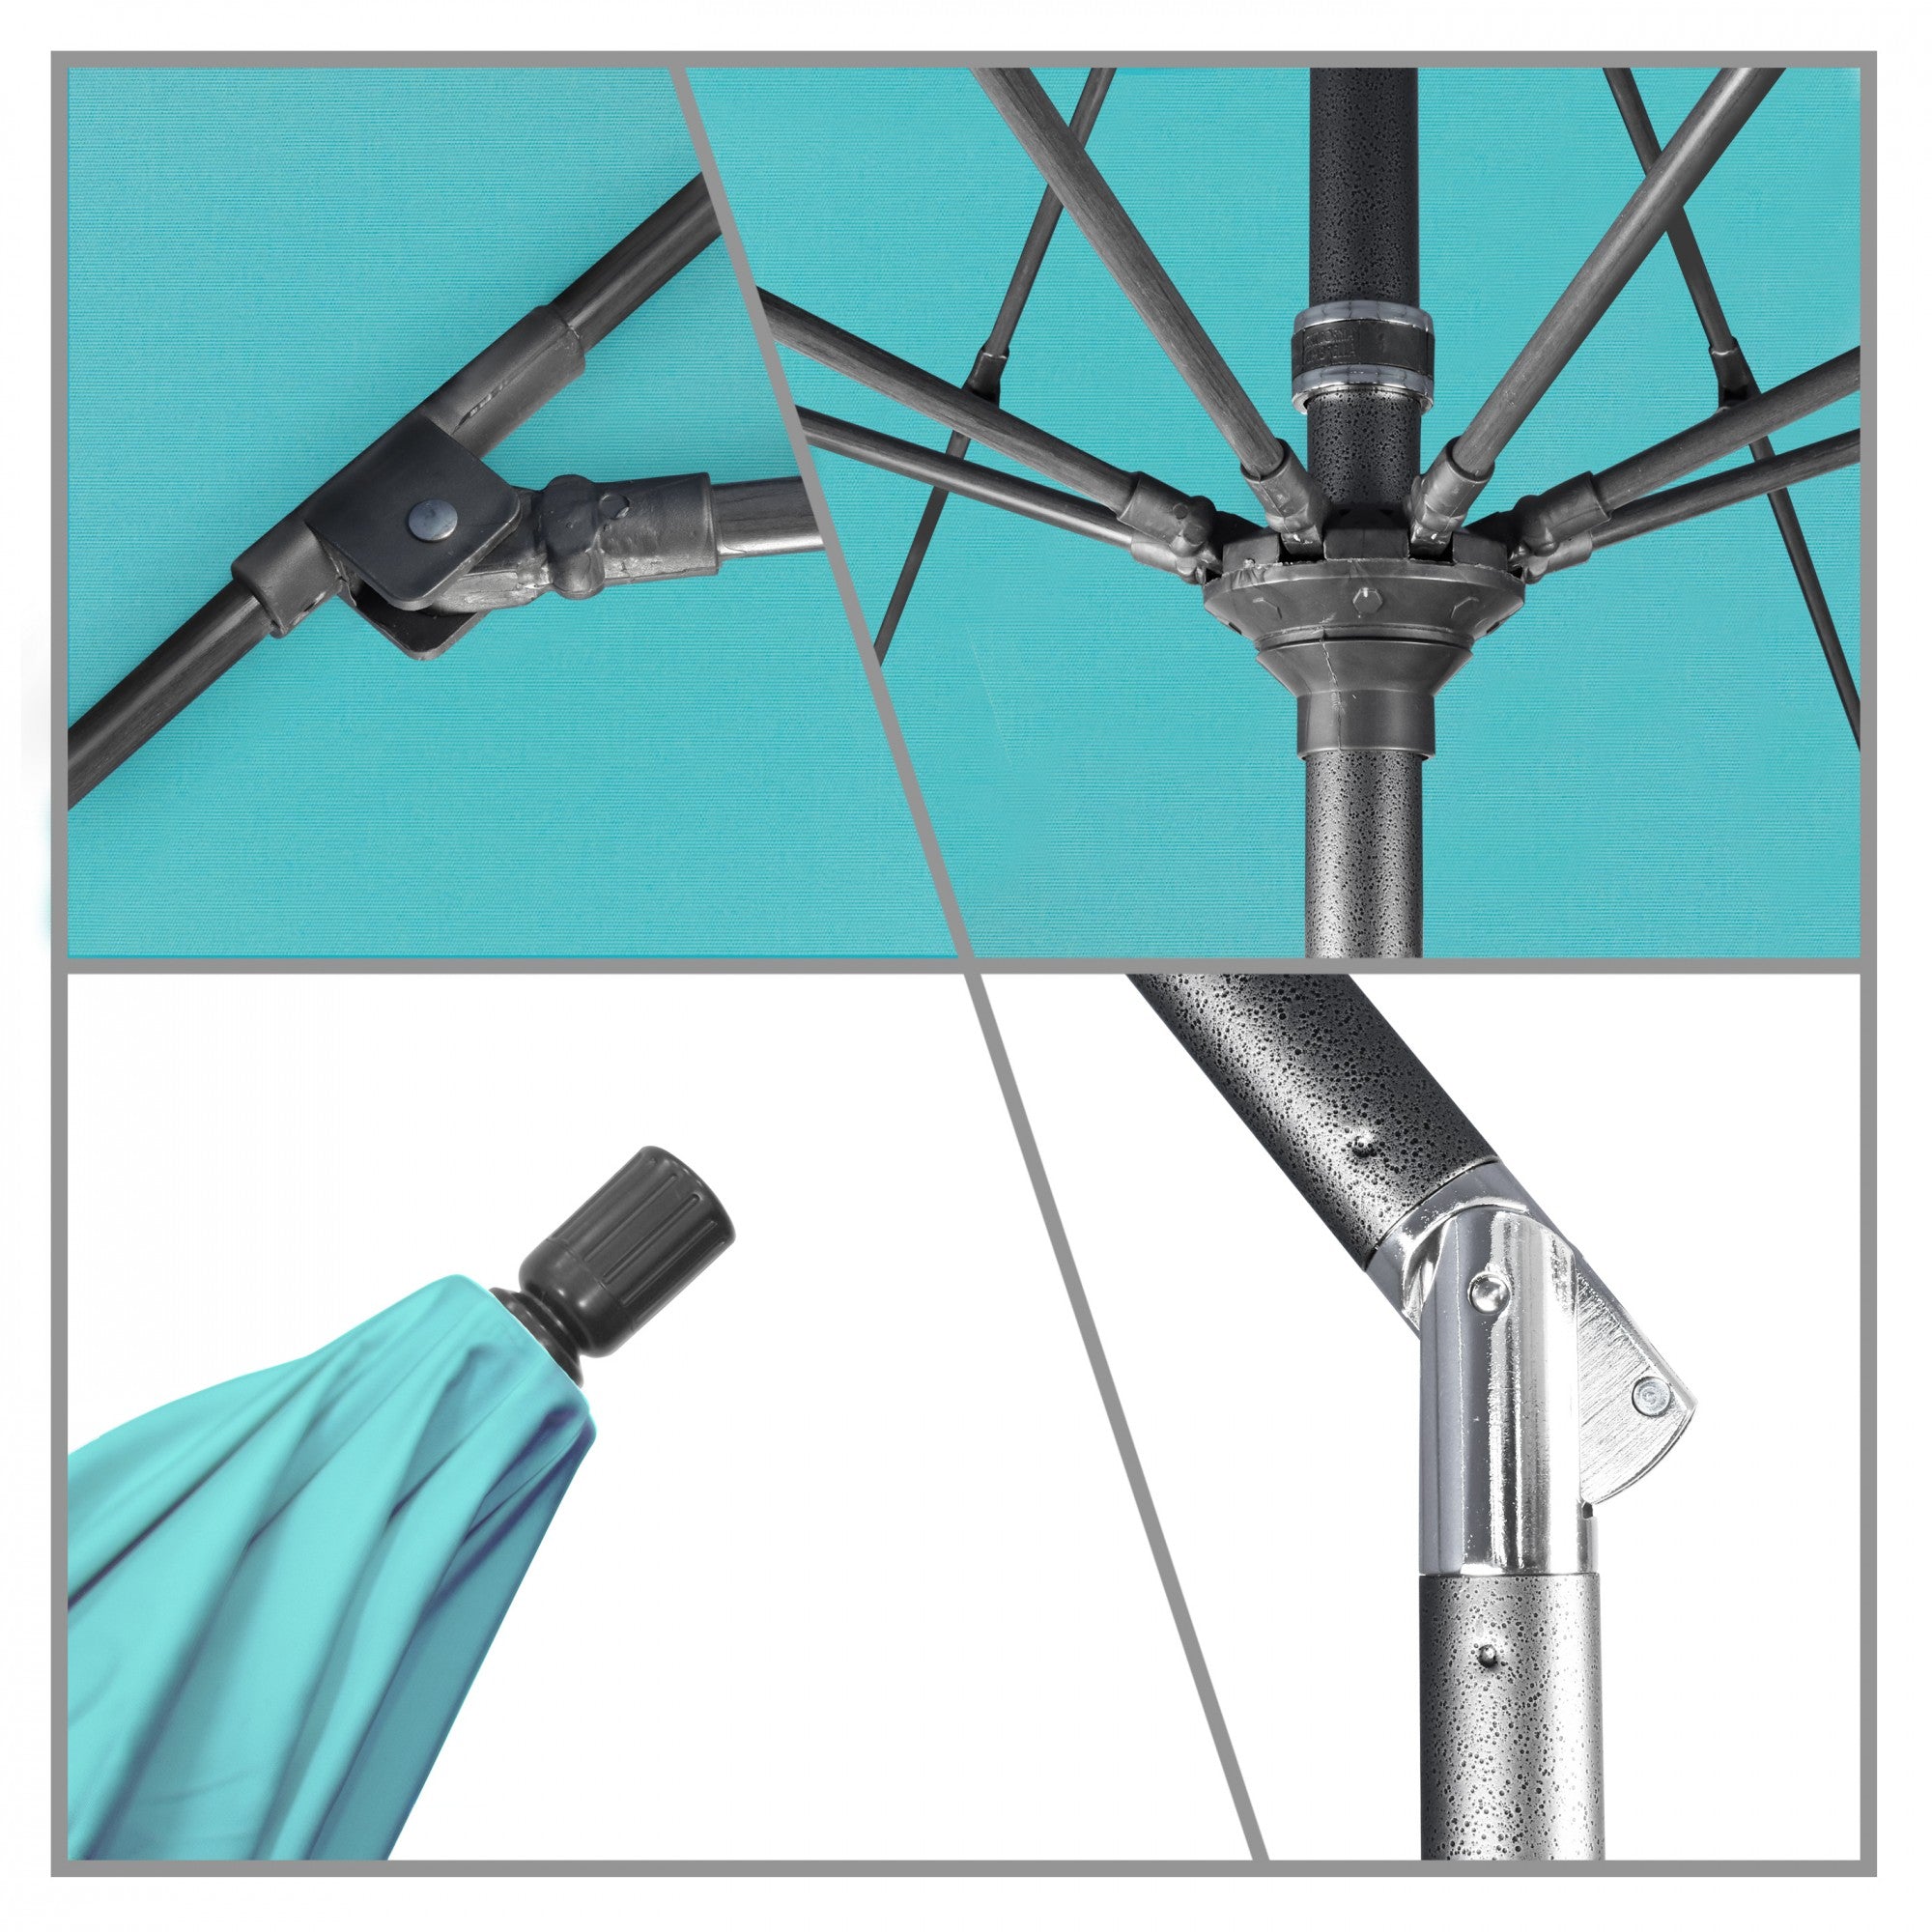 California Umbrella - 7.5' - Patio Umbrella Umbrella - Aluminum Pole - Aruba - Sunbrella  - GSCUF758010-5416